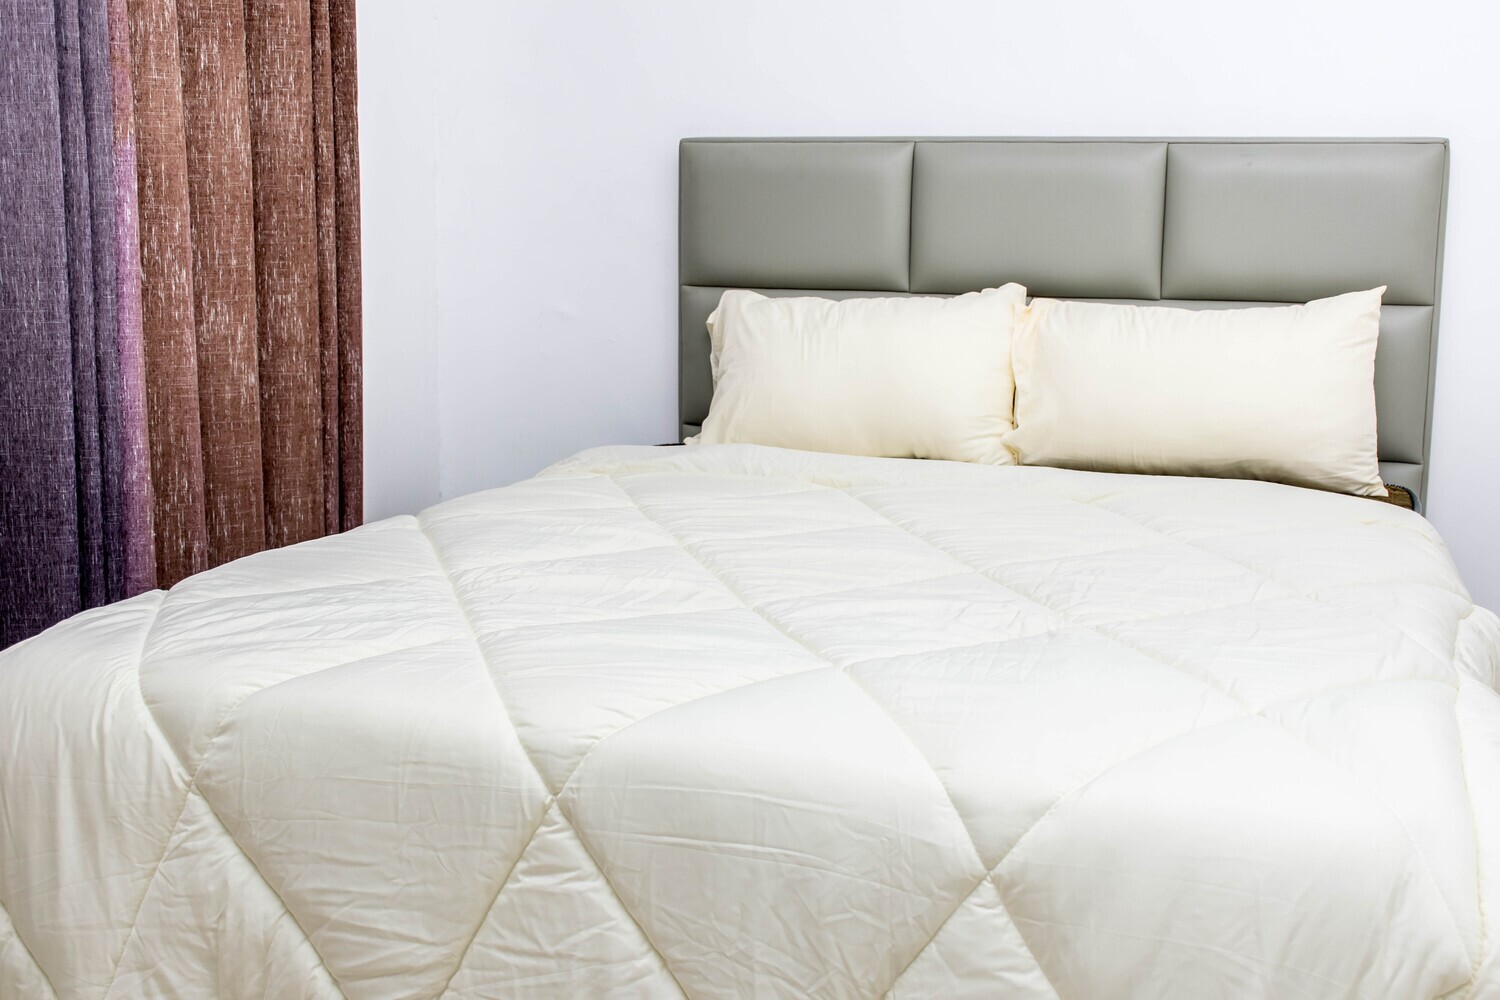 CIH Plain Ivory Comforter Duvet with 1 Flat Sheet,2 pillow cases polycotton 75GSM 6*6